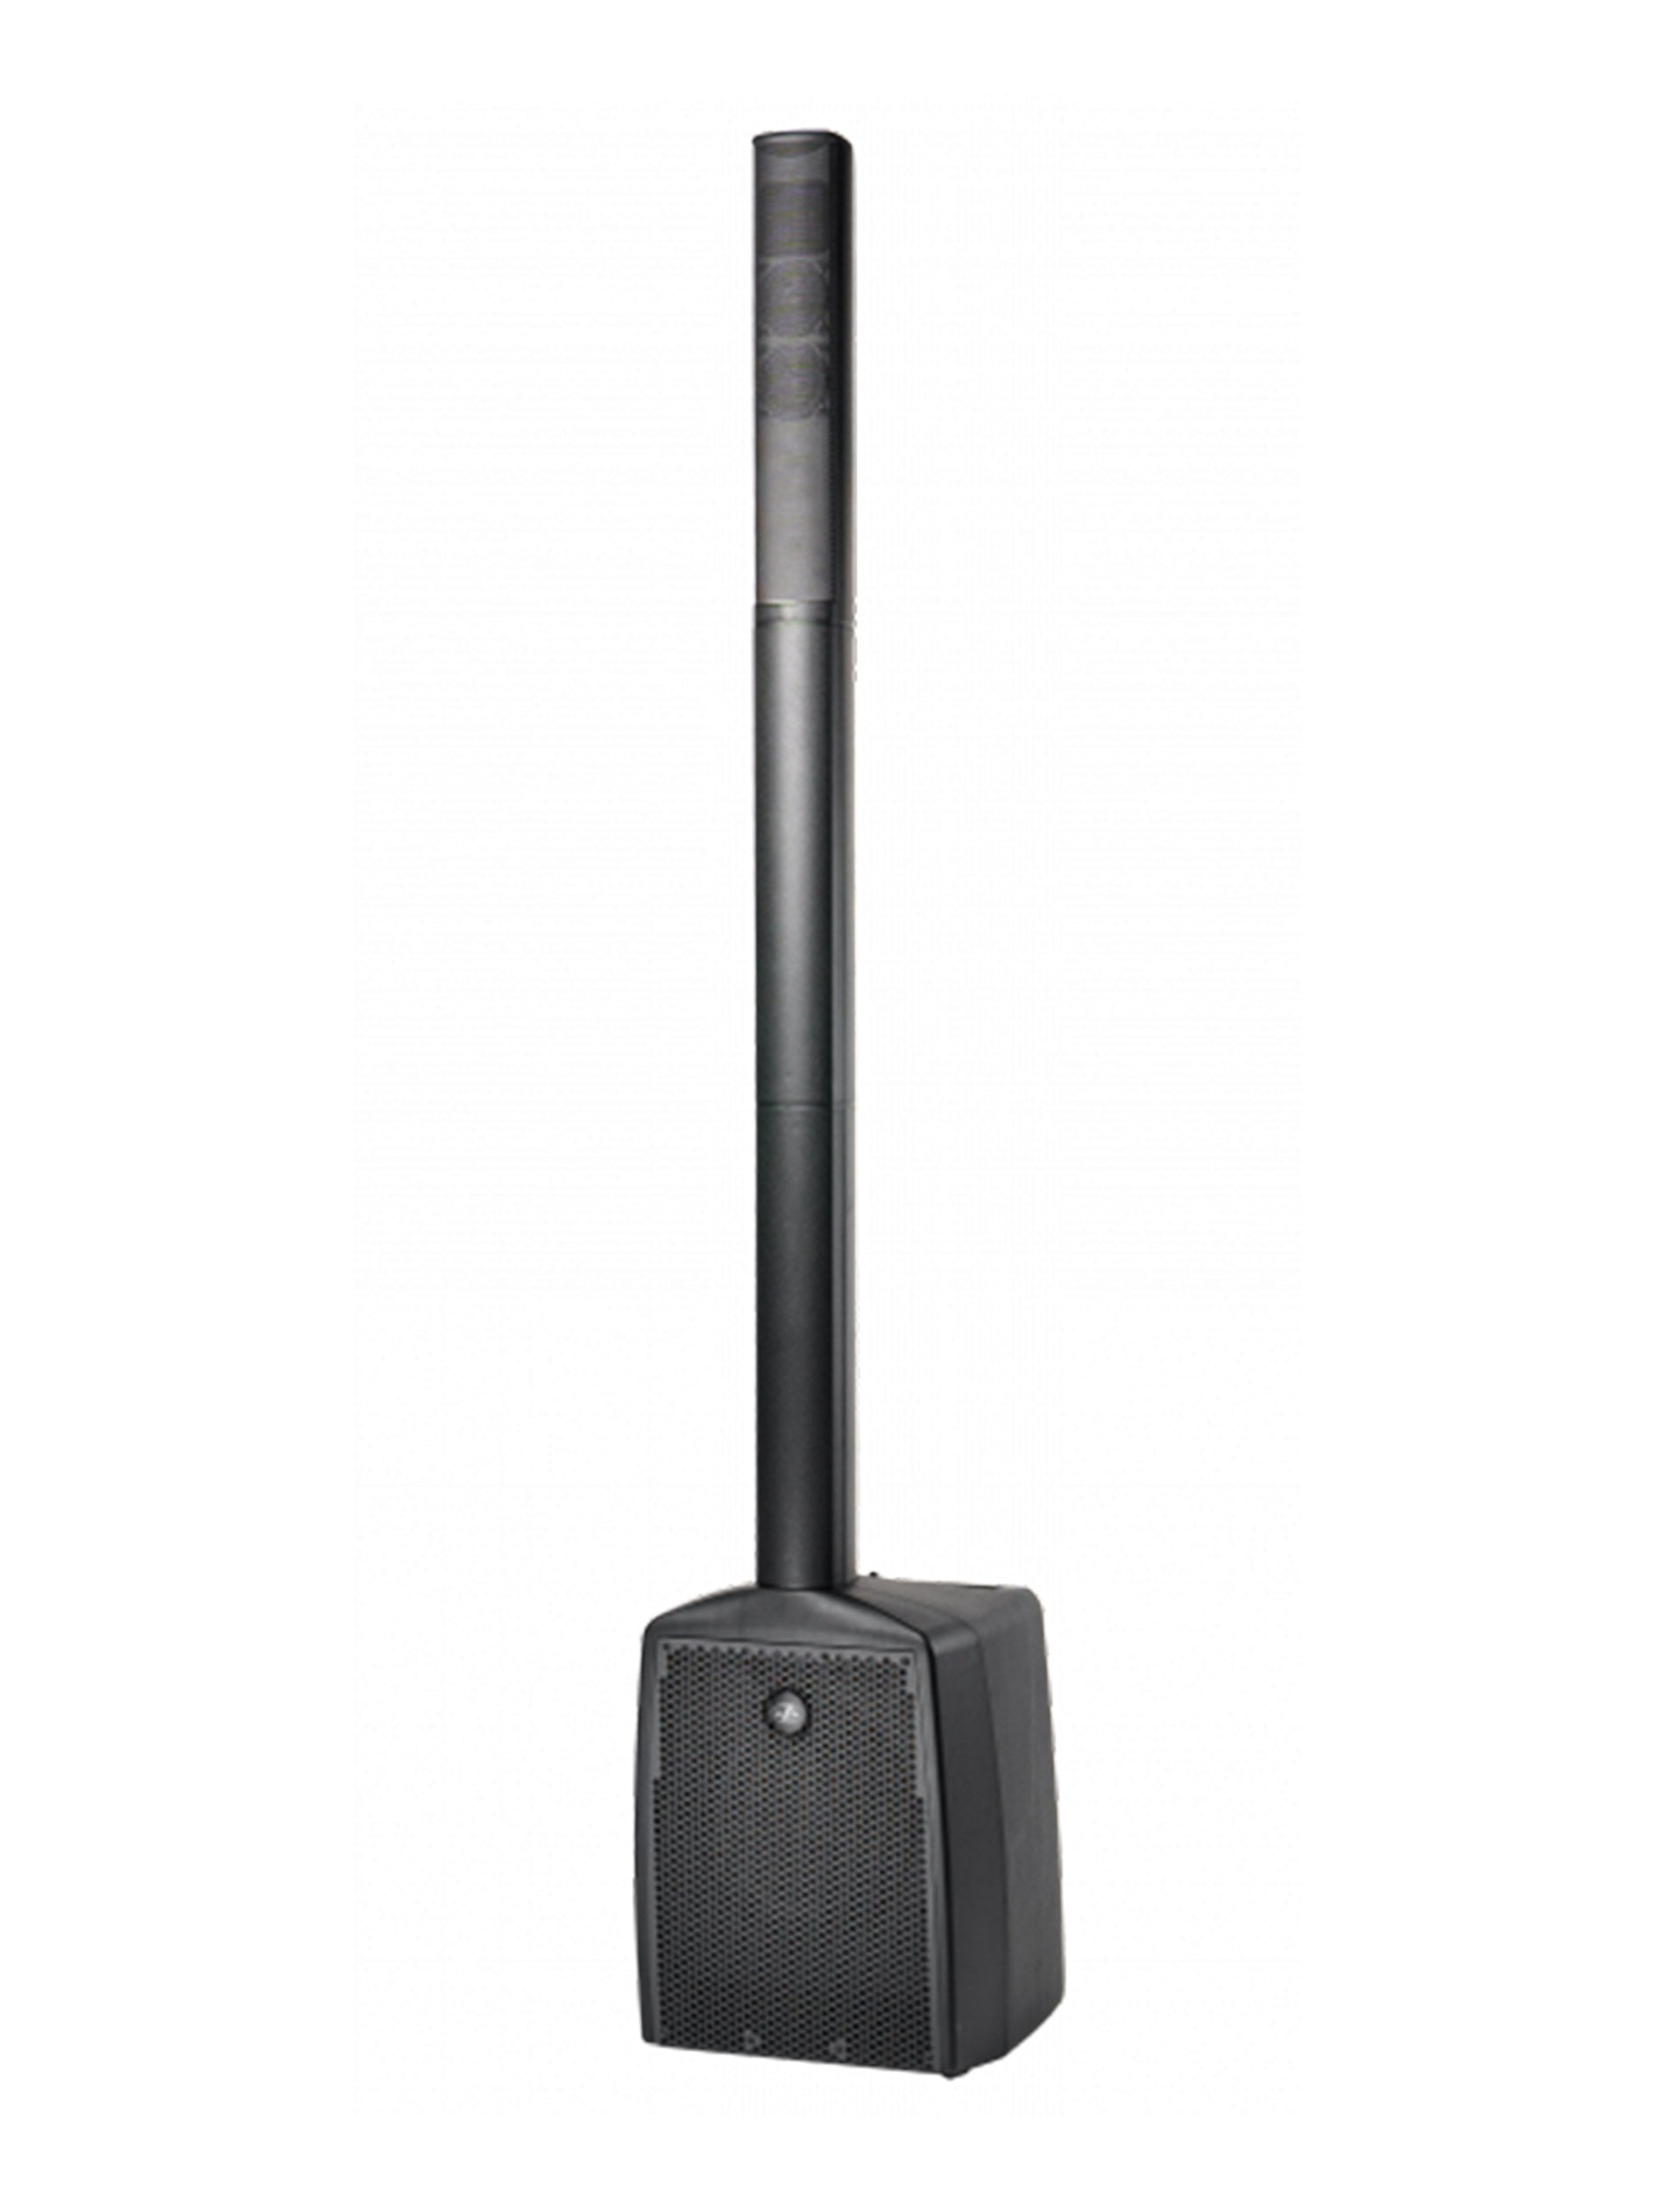 B-Stock: DAS Audio ALTEA-DUO-10A, 3-Way Powered Portable Column System - Black by DAS Audio